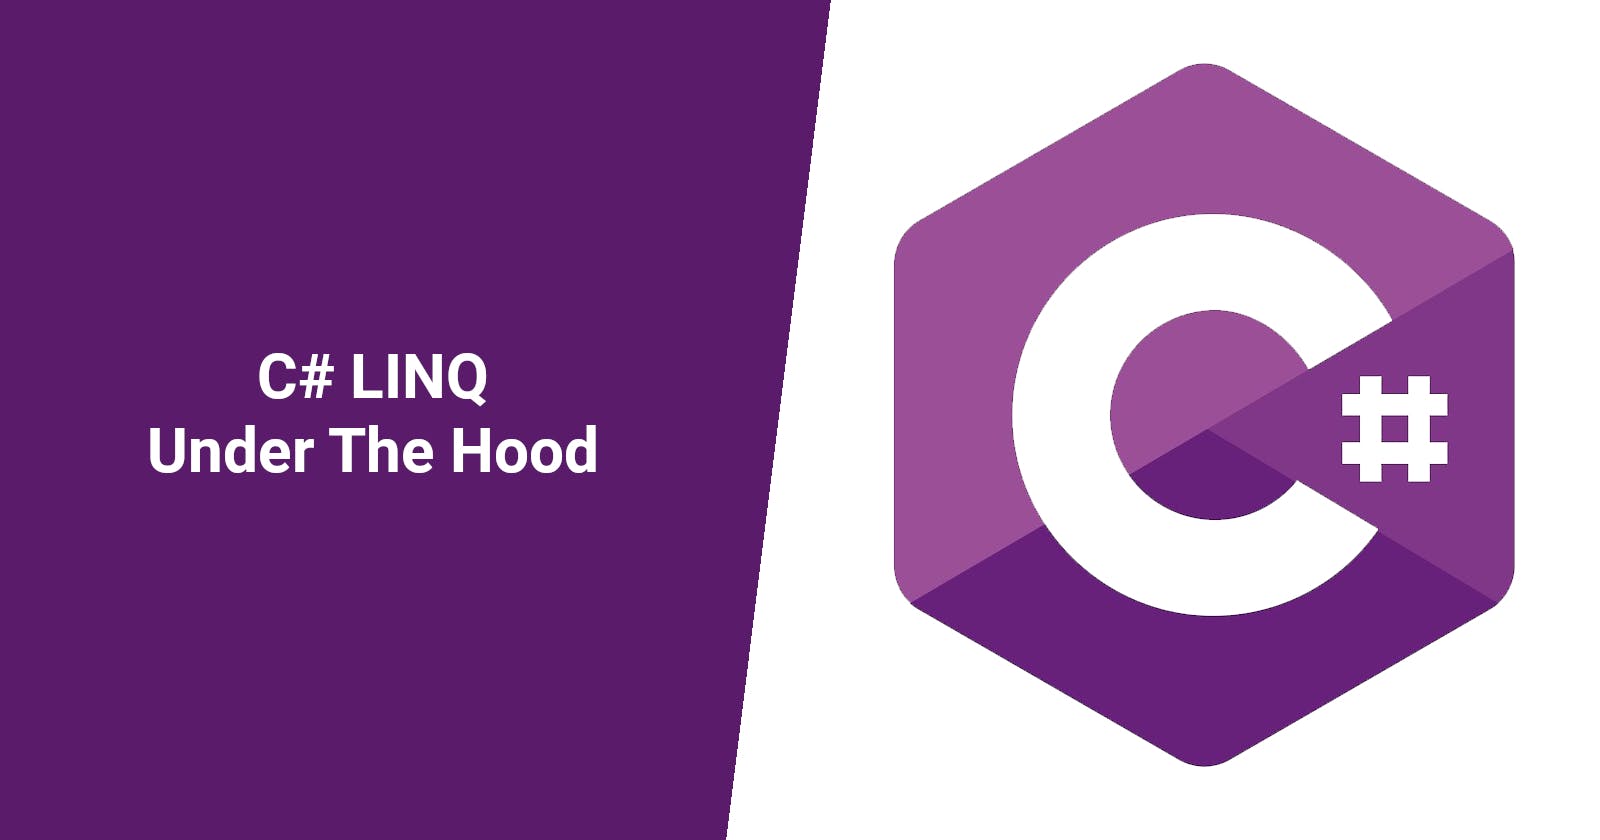 C# LINQ - Under the hood